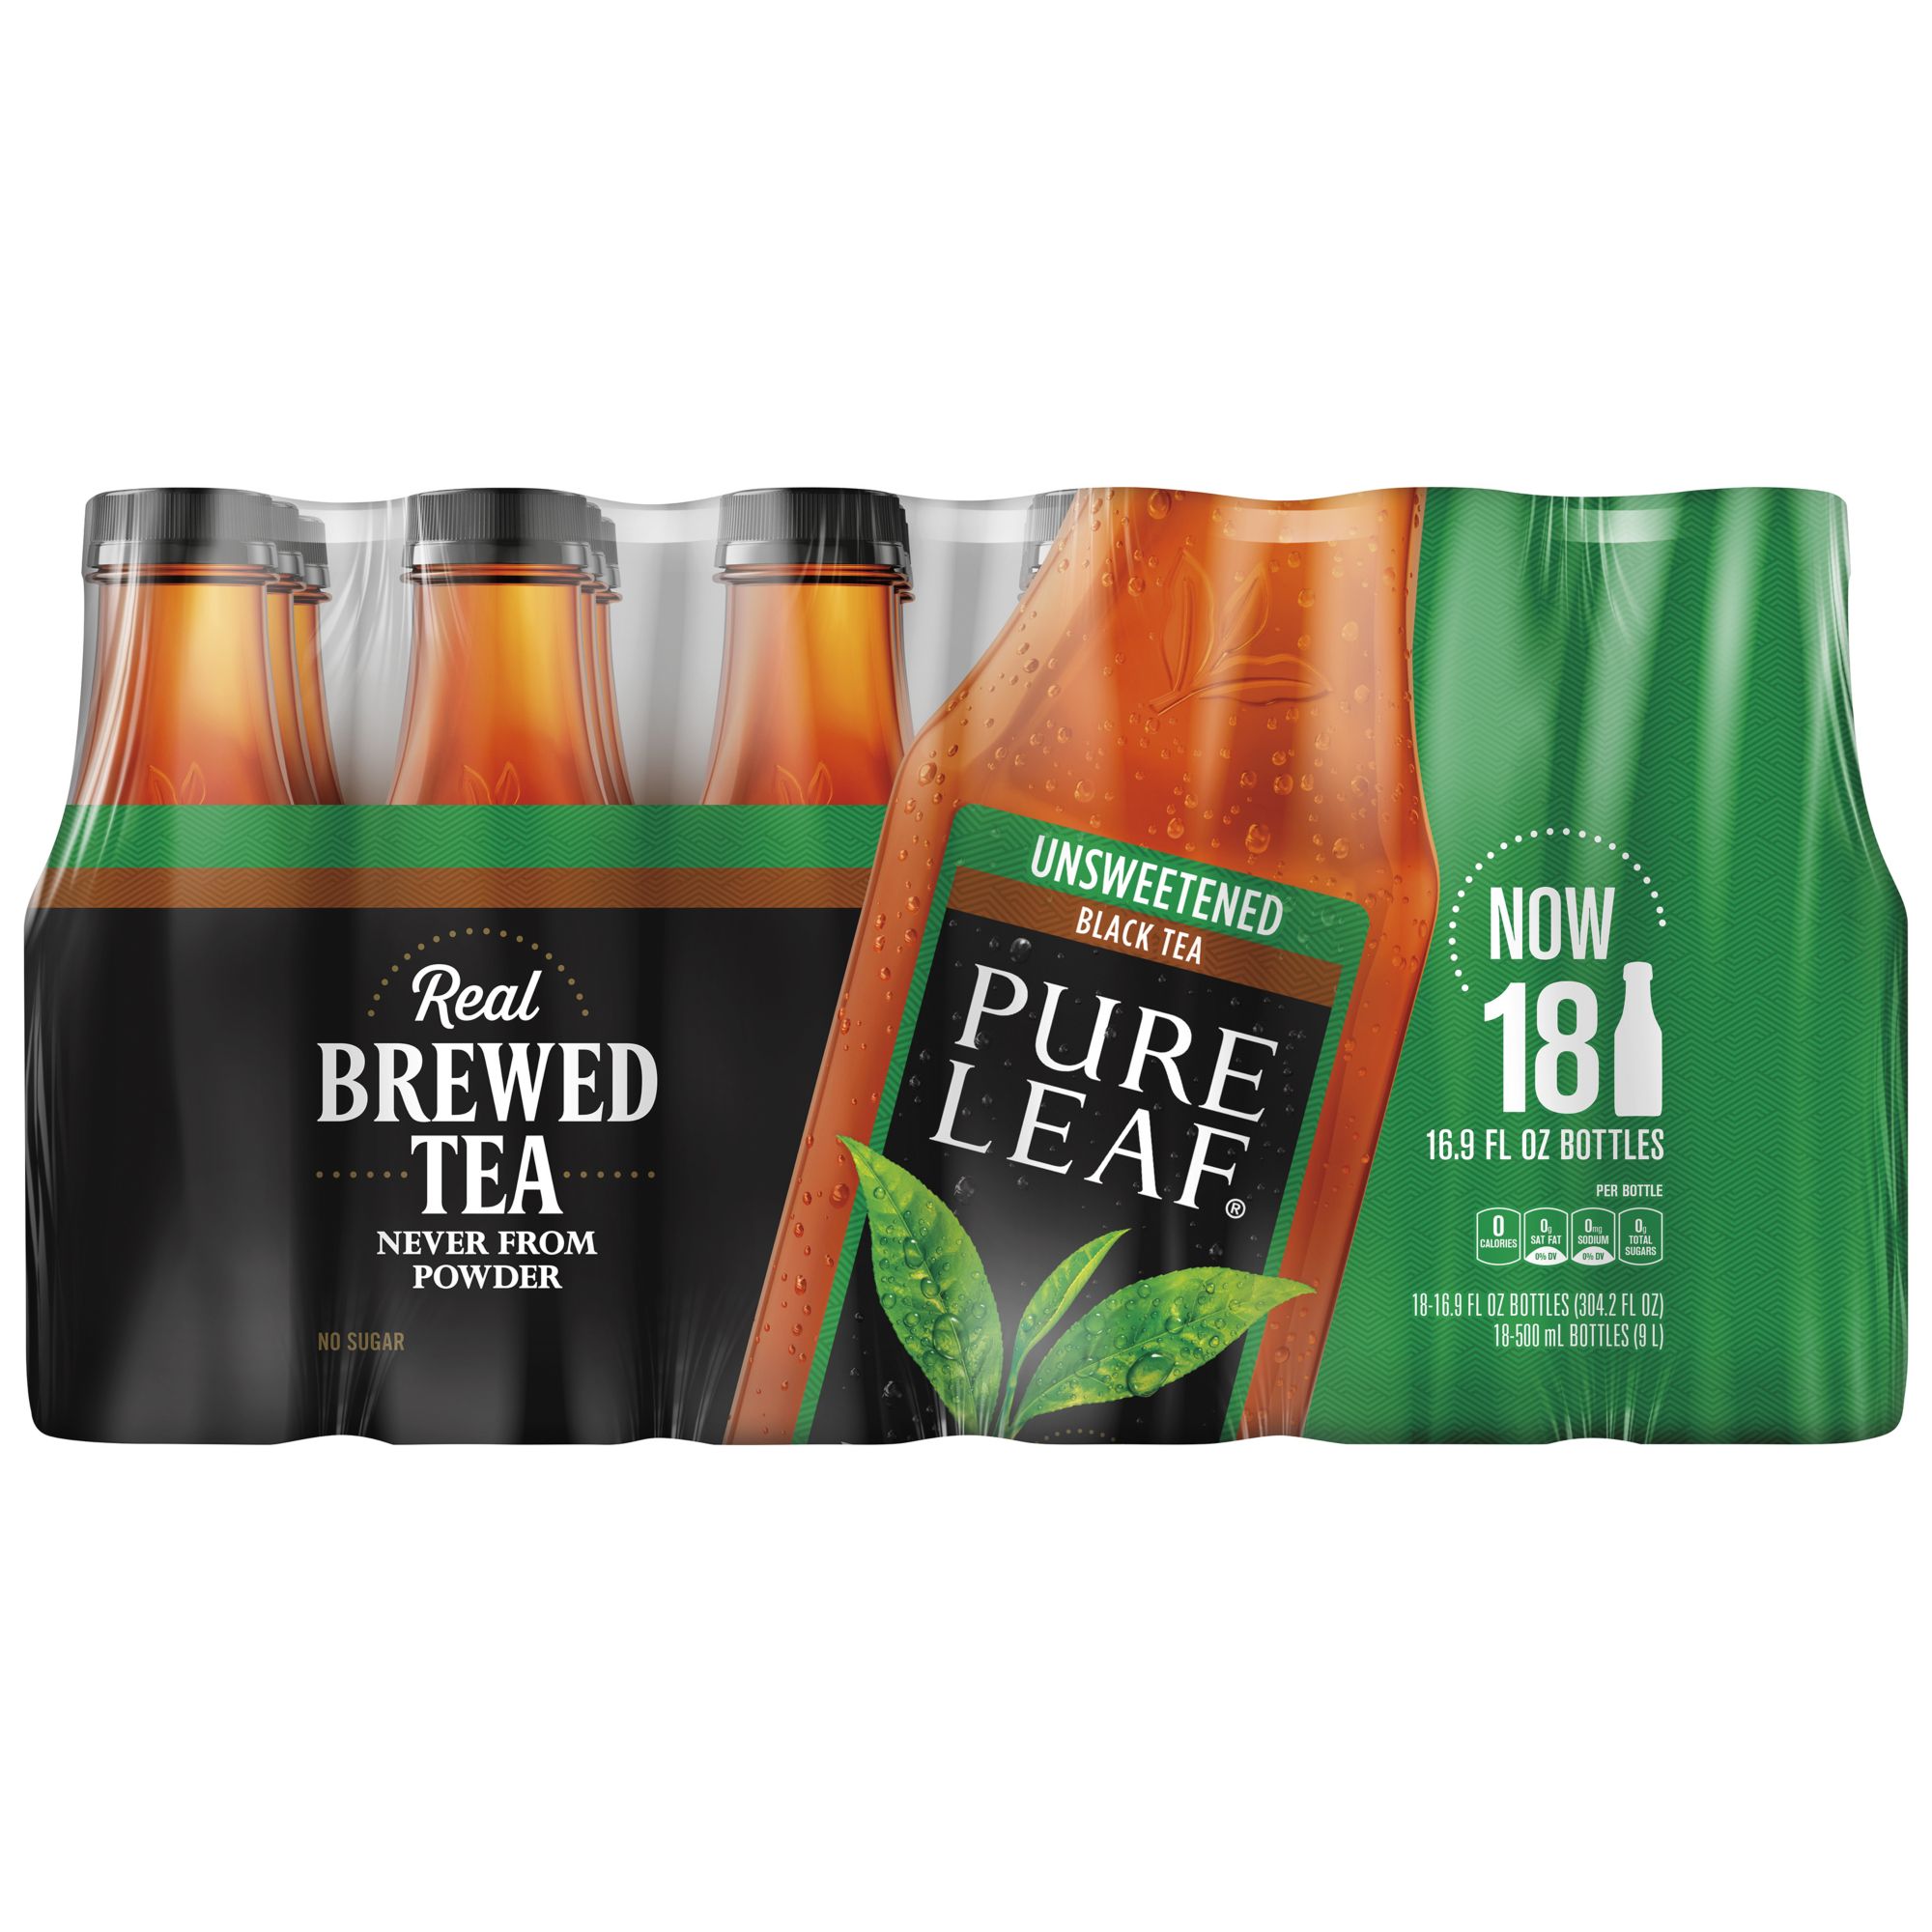  Pure leaf Iced Tea, Unsweetened, Real Brewed Tea (64 oz  Bottle) : Grocery & Gourmet Food